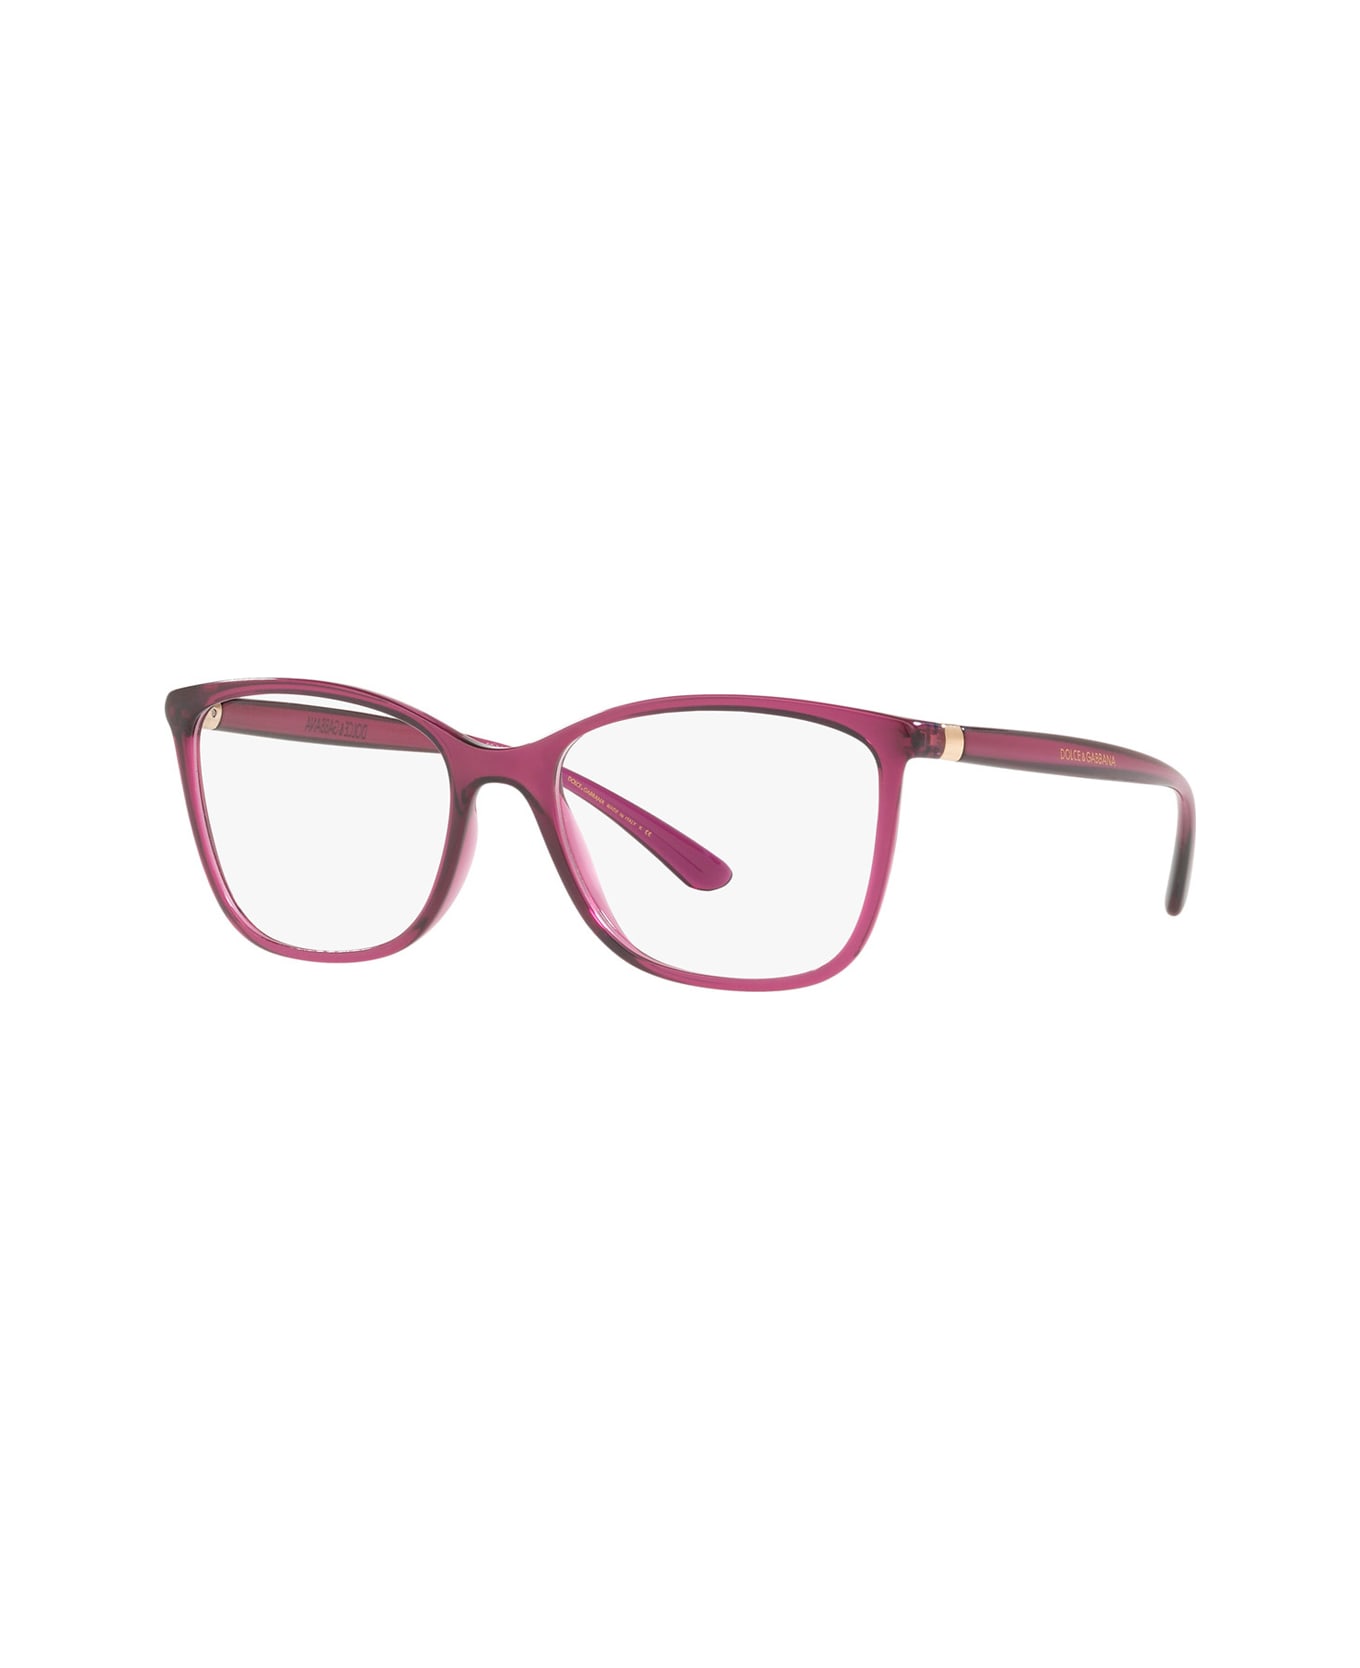 Dolce & Gabbana Eyewear Dg5026 1754 Glasses - Rosso